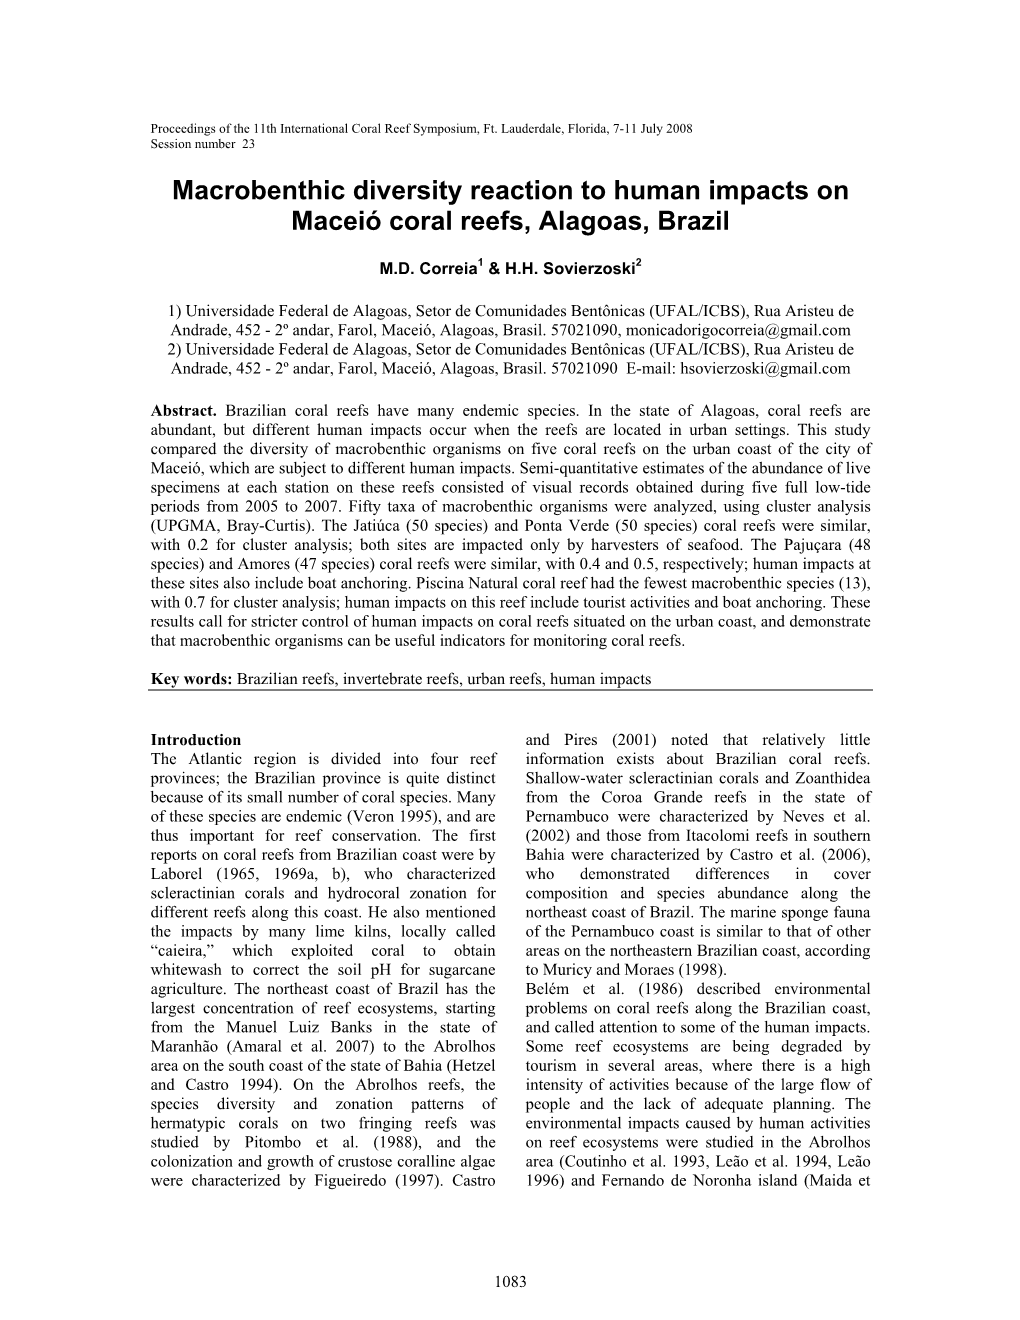 Macrobenthic Diversity Reaction to Human Impacts on Maceió Coral Reefs, Alagoas, Brazil